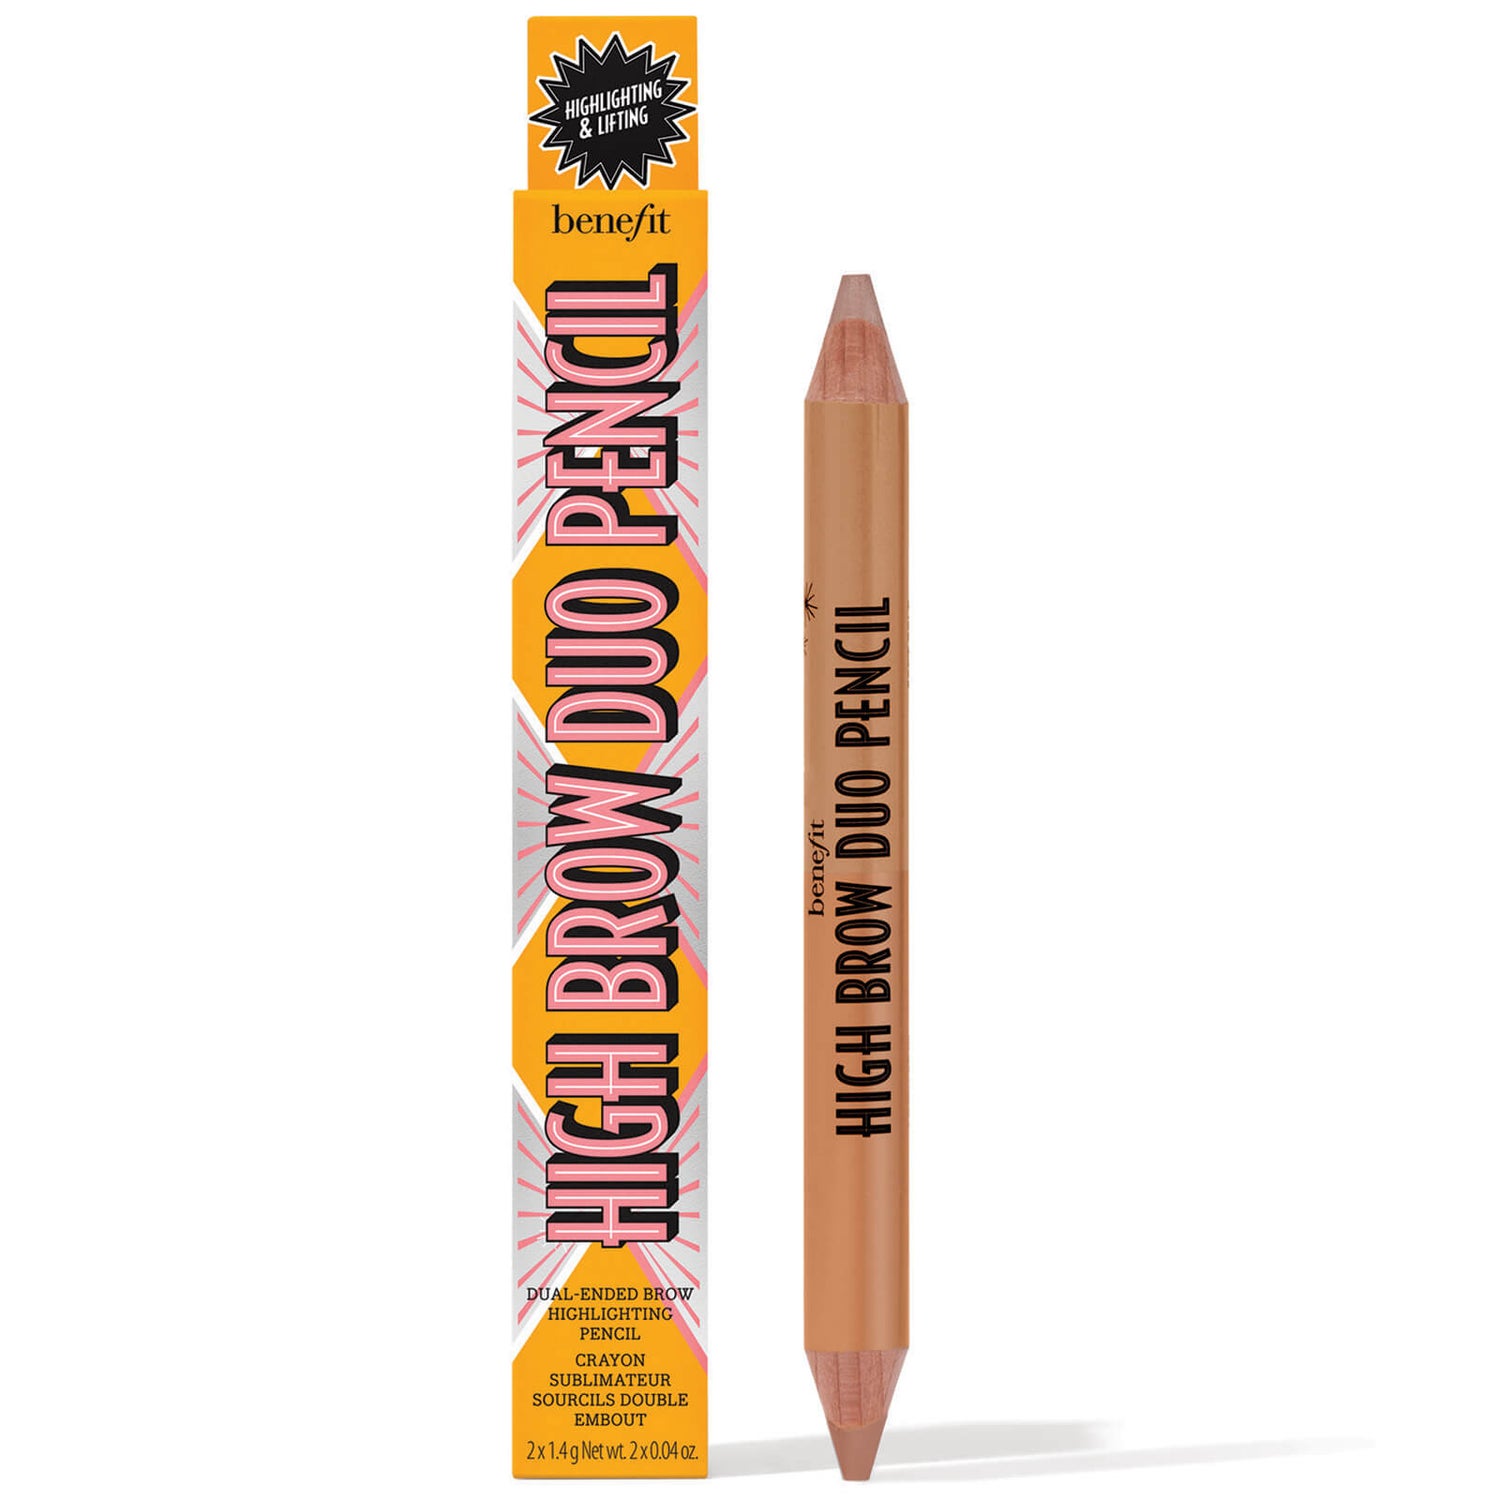 benefit High Brow Duo Highlighting and Lifting Eyebrow Pencil 2.8g (Various Shades)